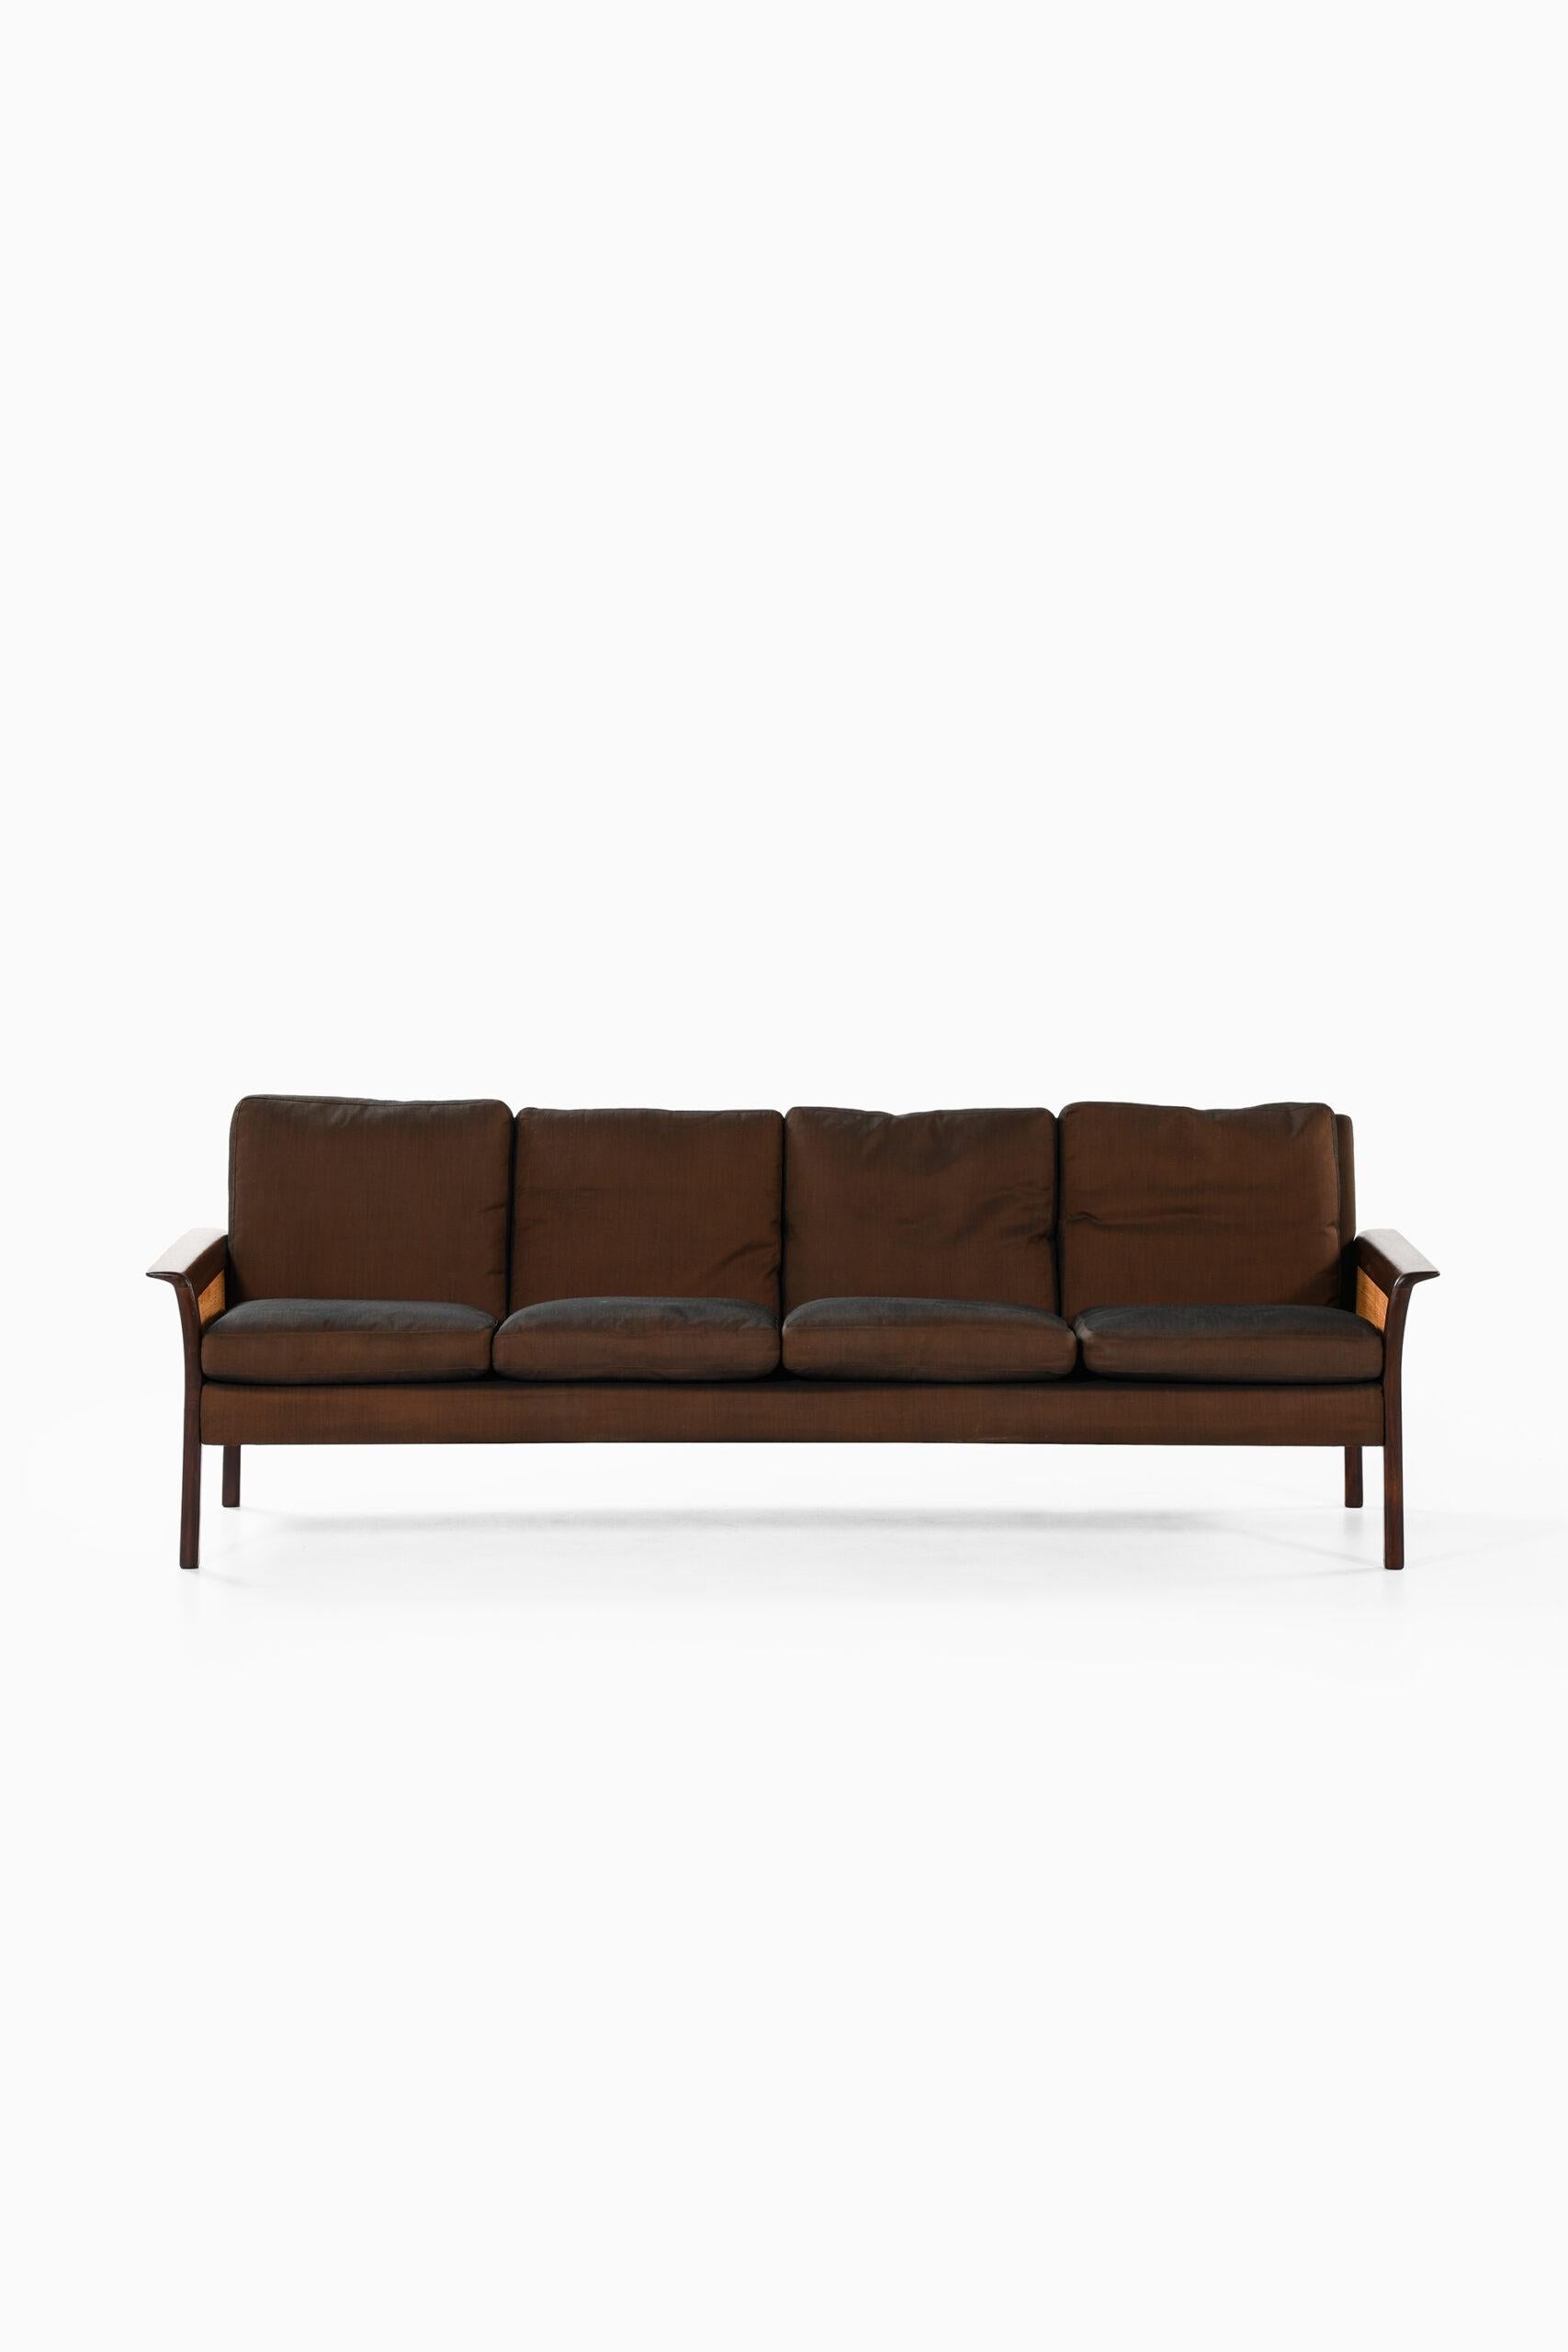 Very rare sofa model 500 designed by Hans Olsen. Produced by C/S Møbler in Denmark.